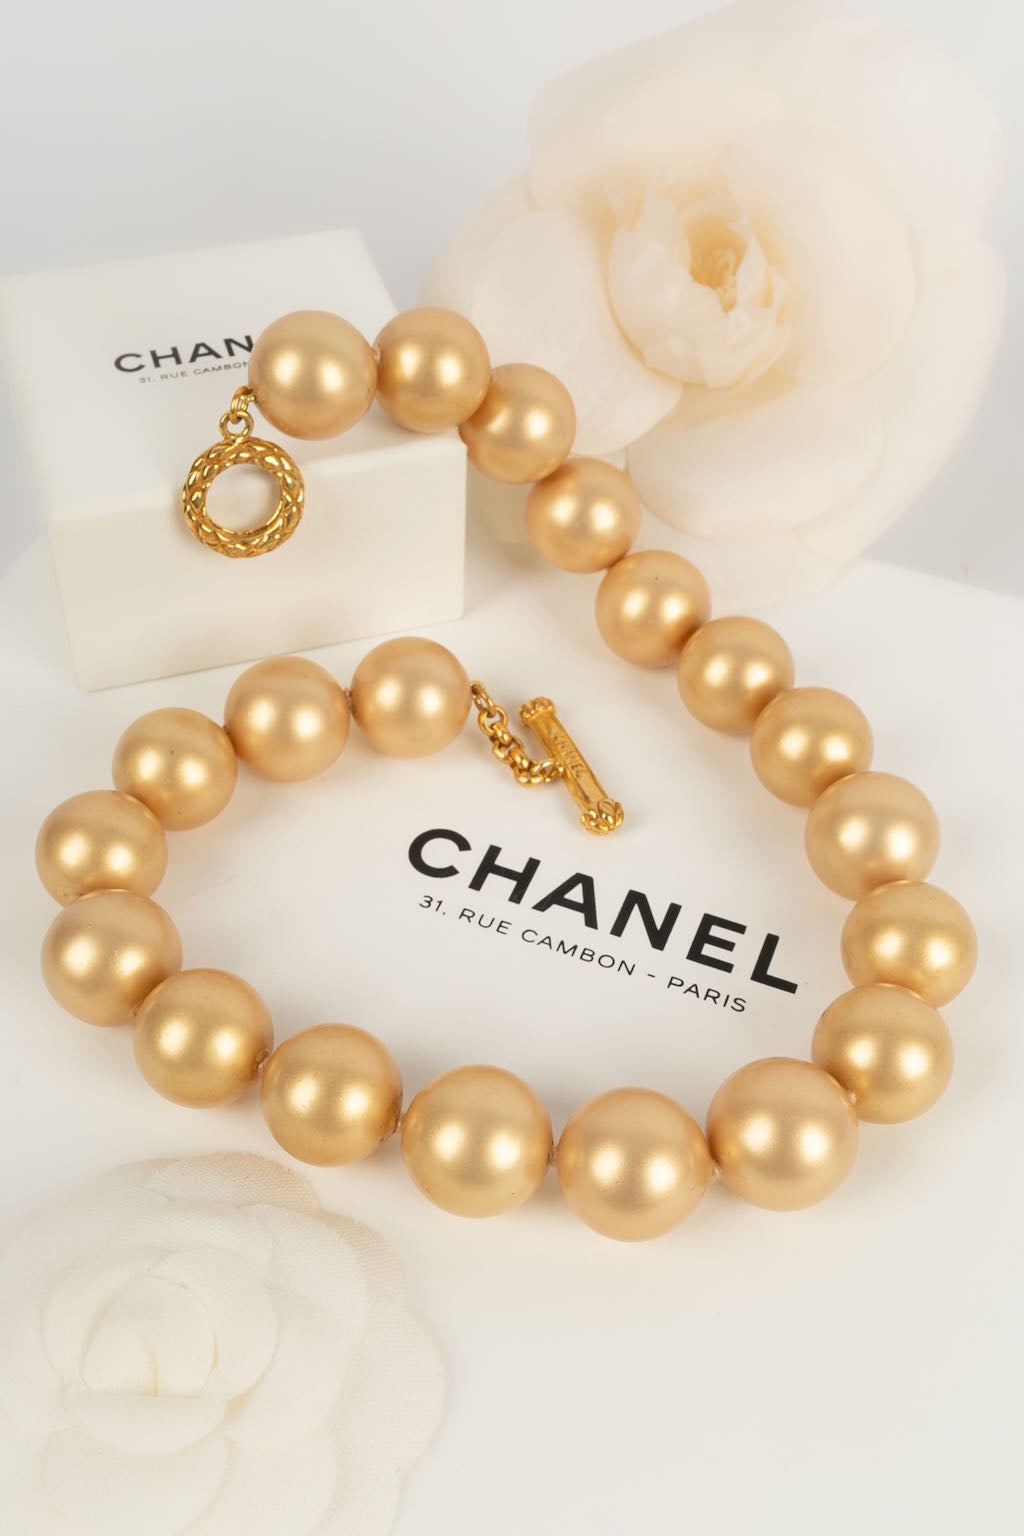 Chanel fancy belt in silver metal and gold metal